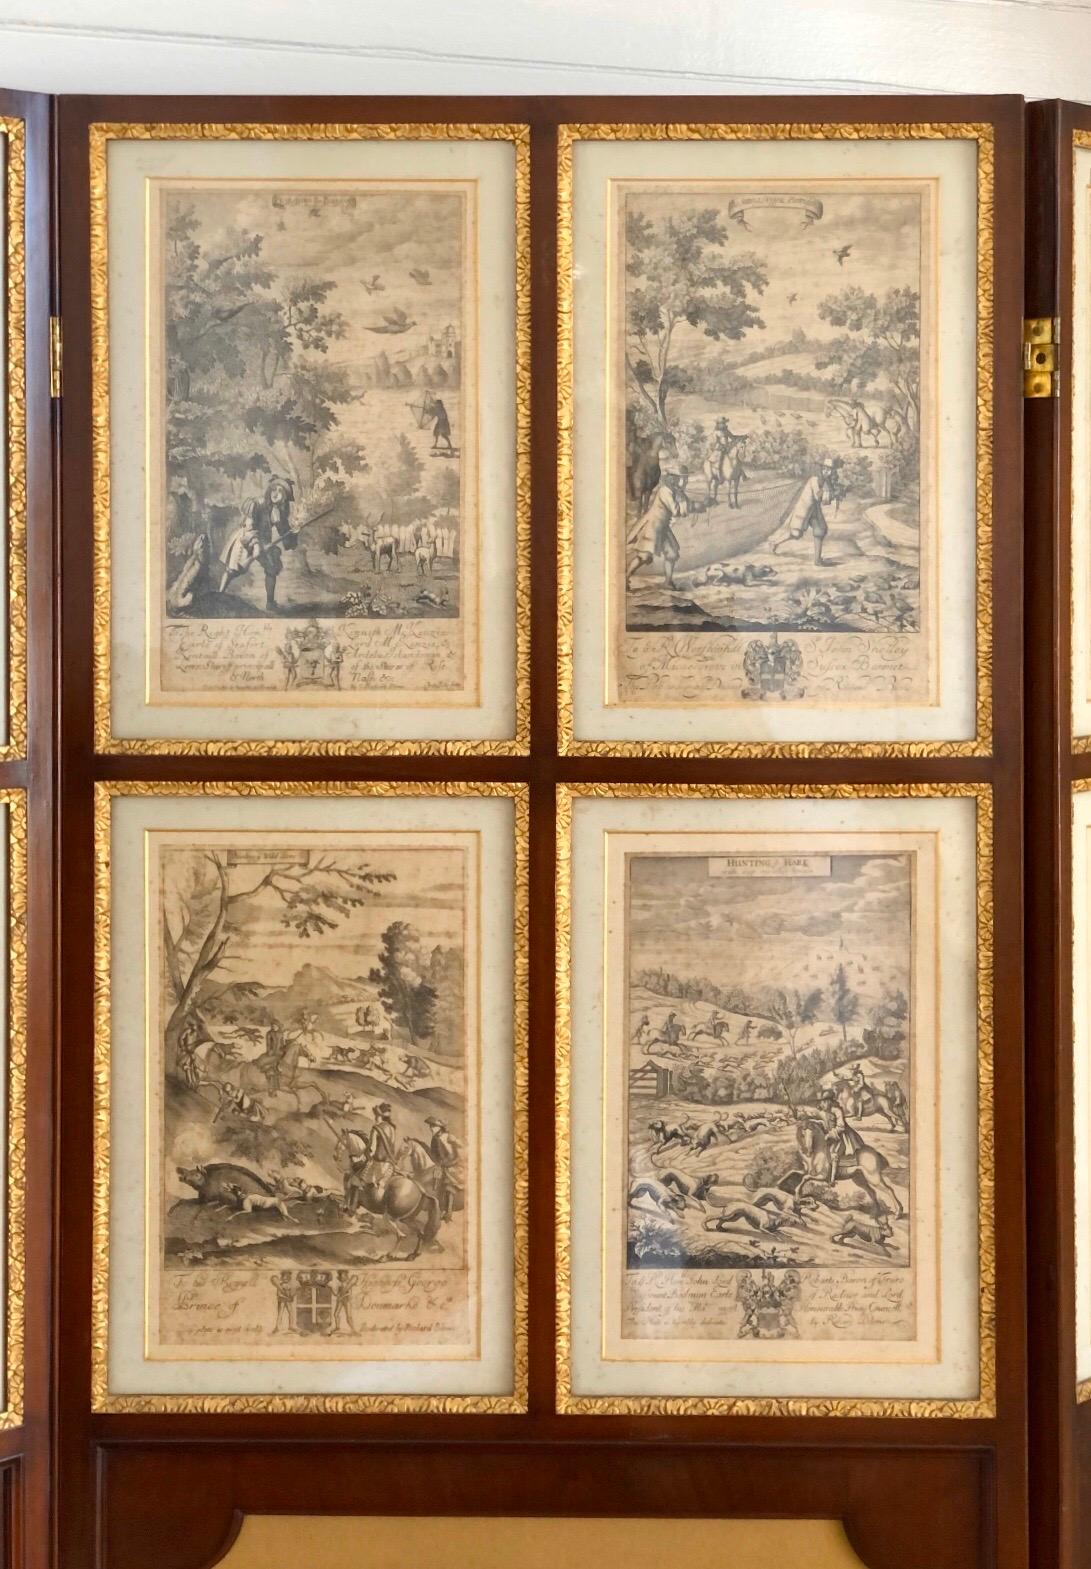 Engraved Set of 24 Engravings by Richard Blome Framed in Pair of Regency Screens For Sale